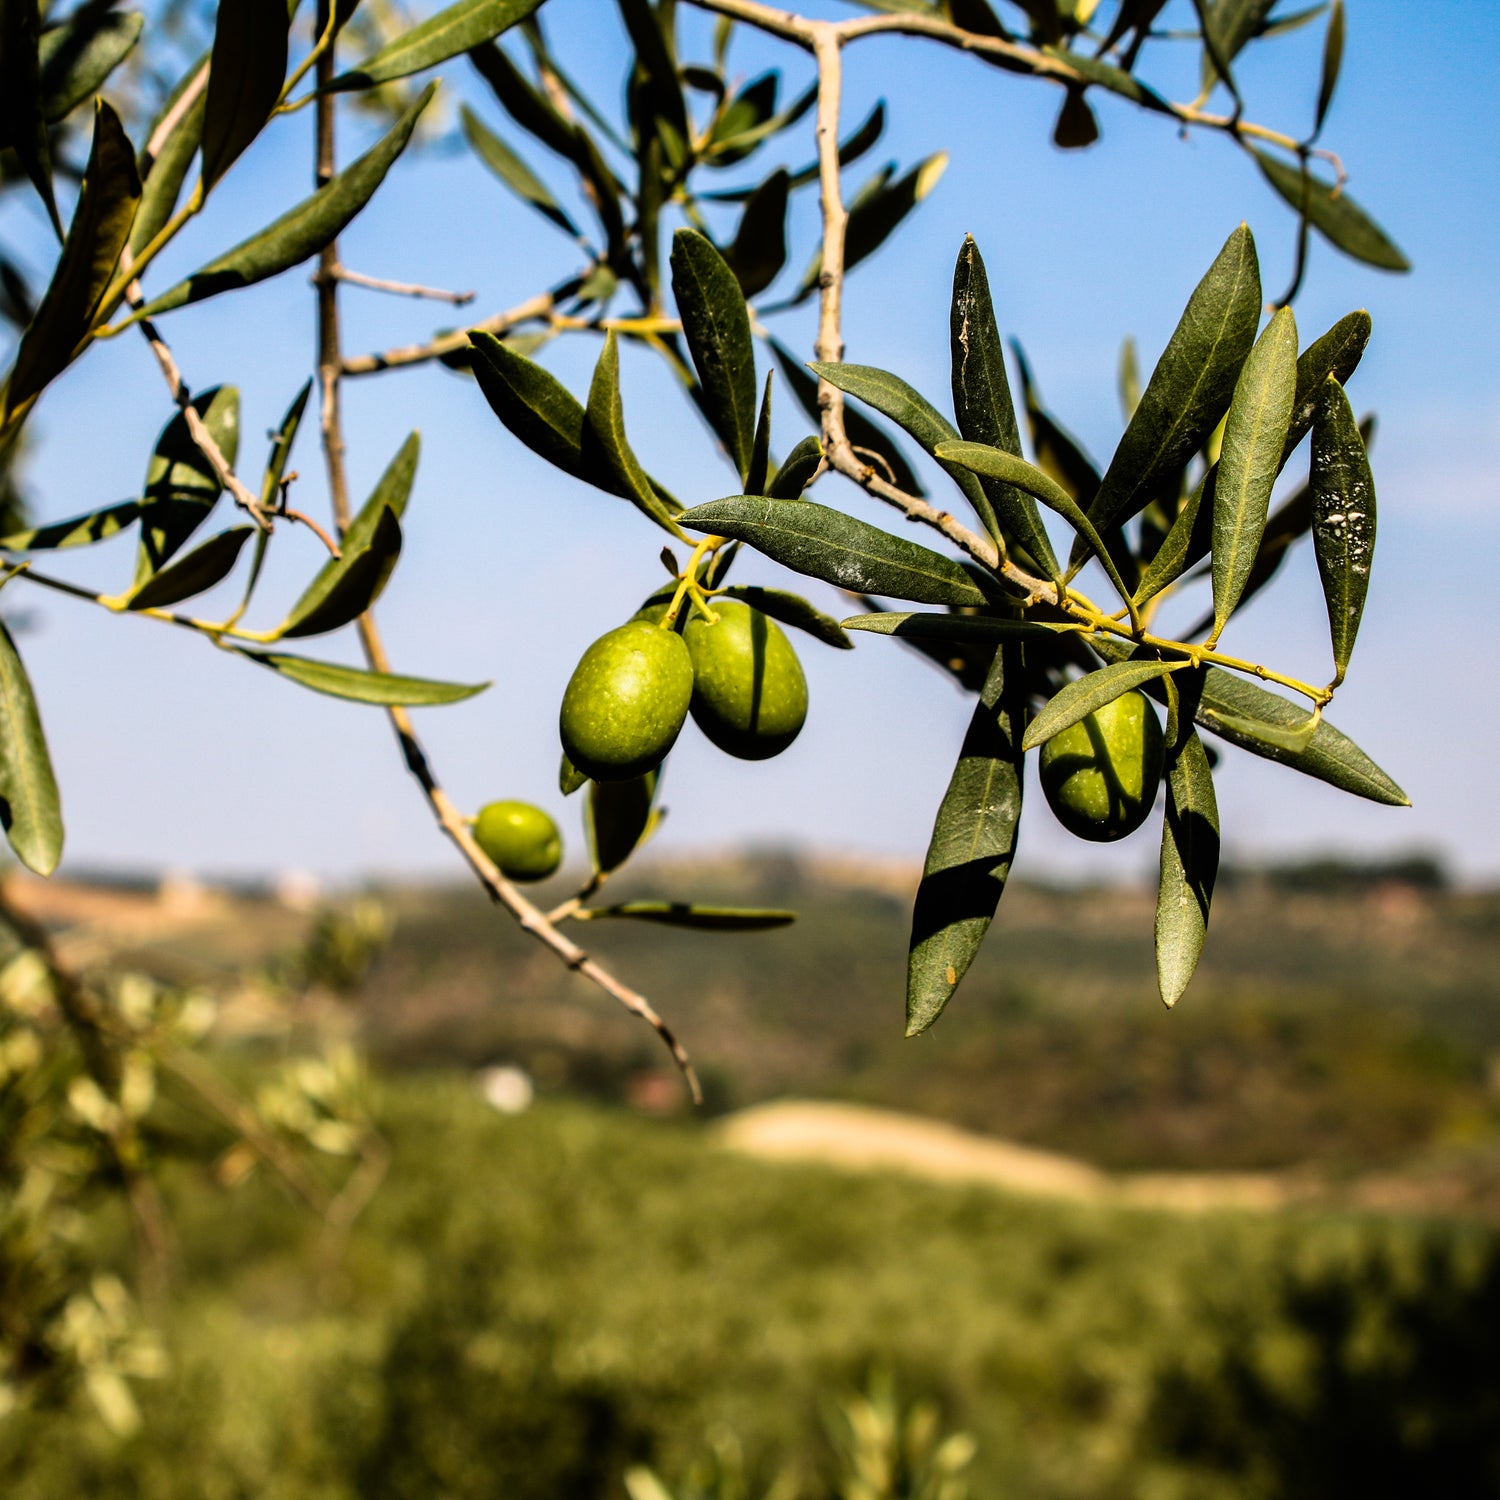 Olives à Loreto Aprutino dans les Abruzzes en Italie - Abruzzo&Co